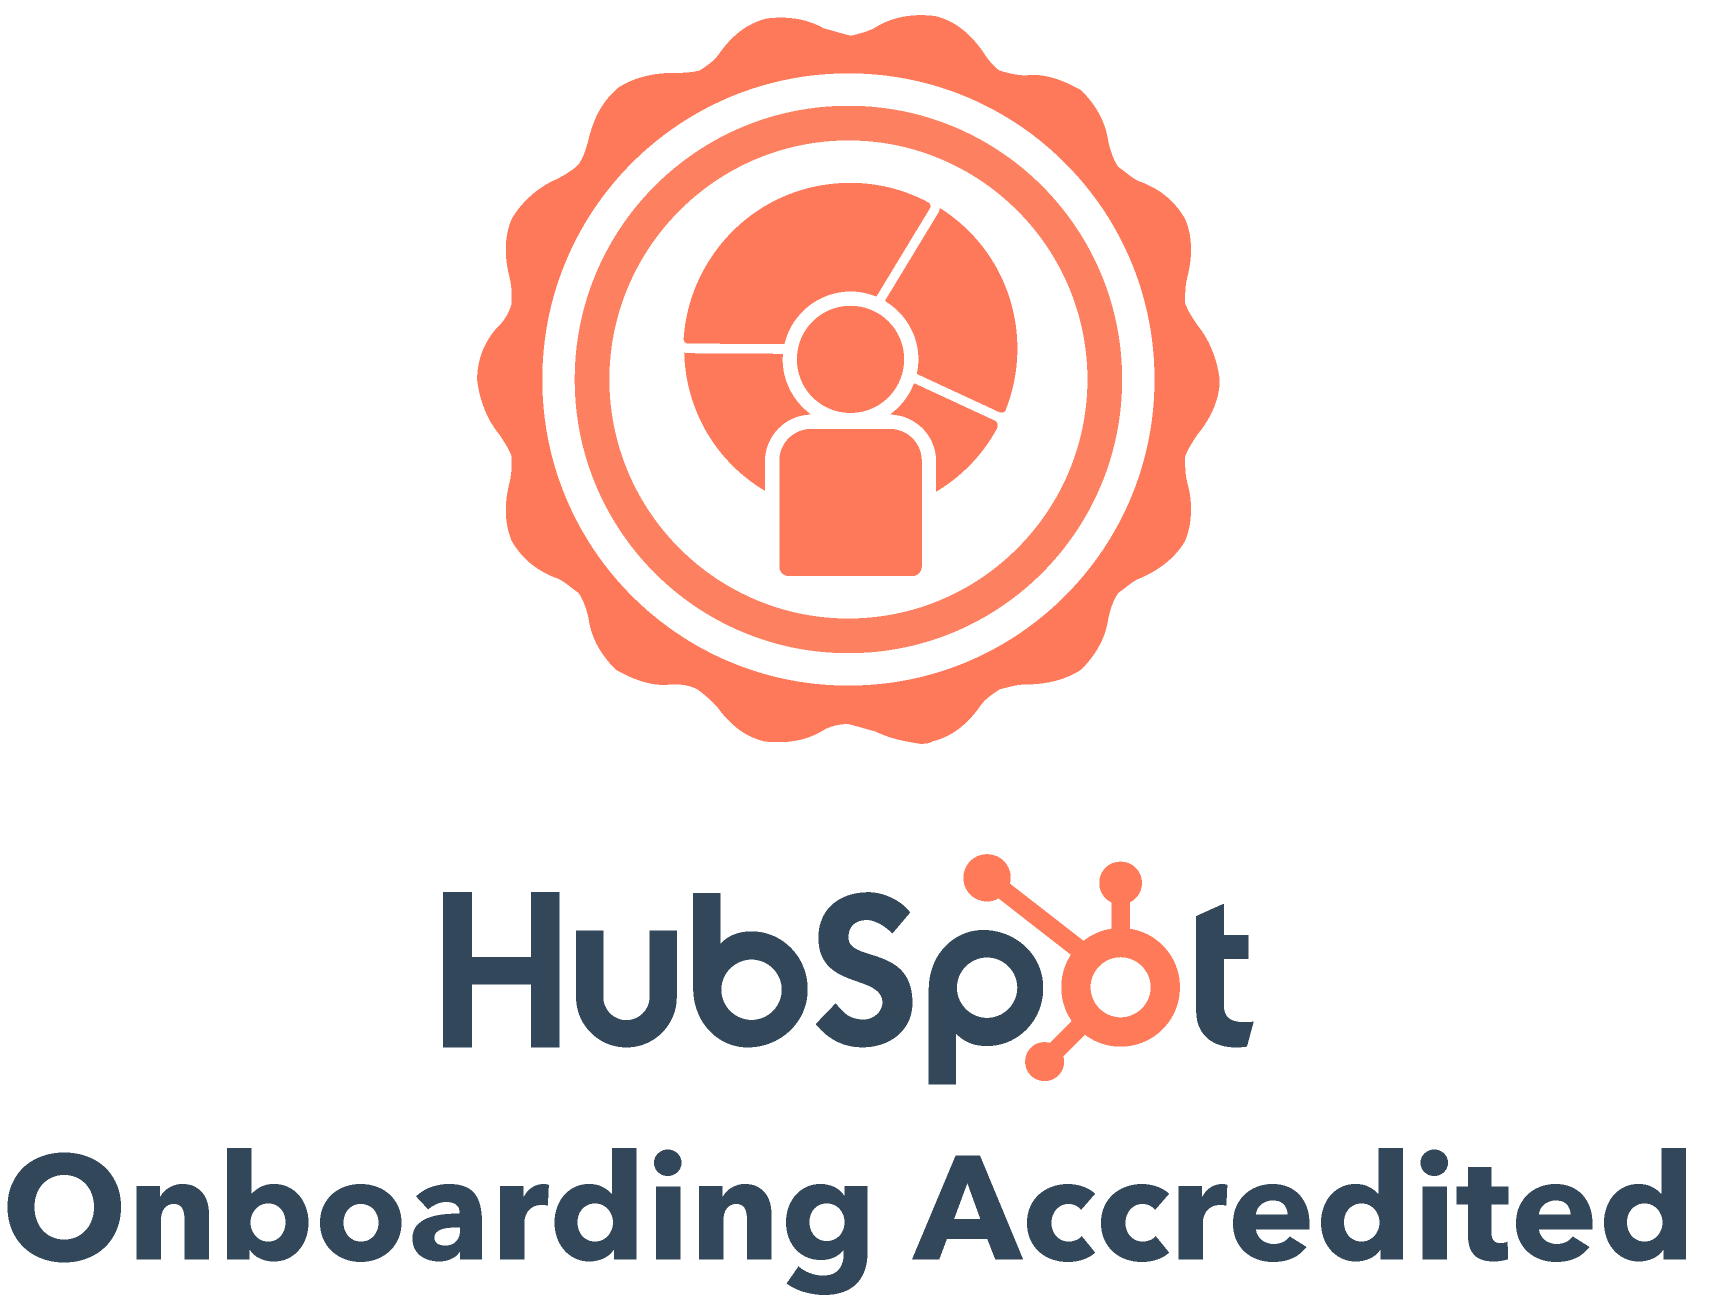 hubspot enterprise onboarding - onboarding accreditation